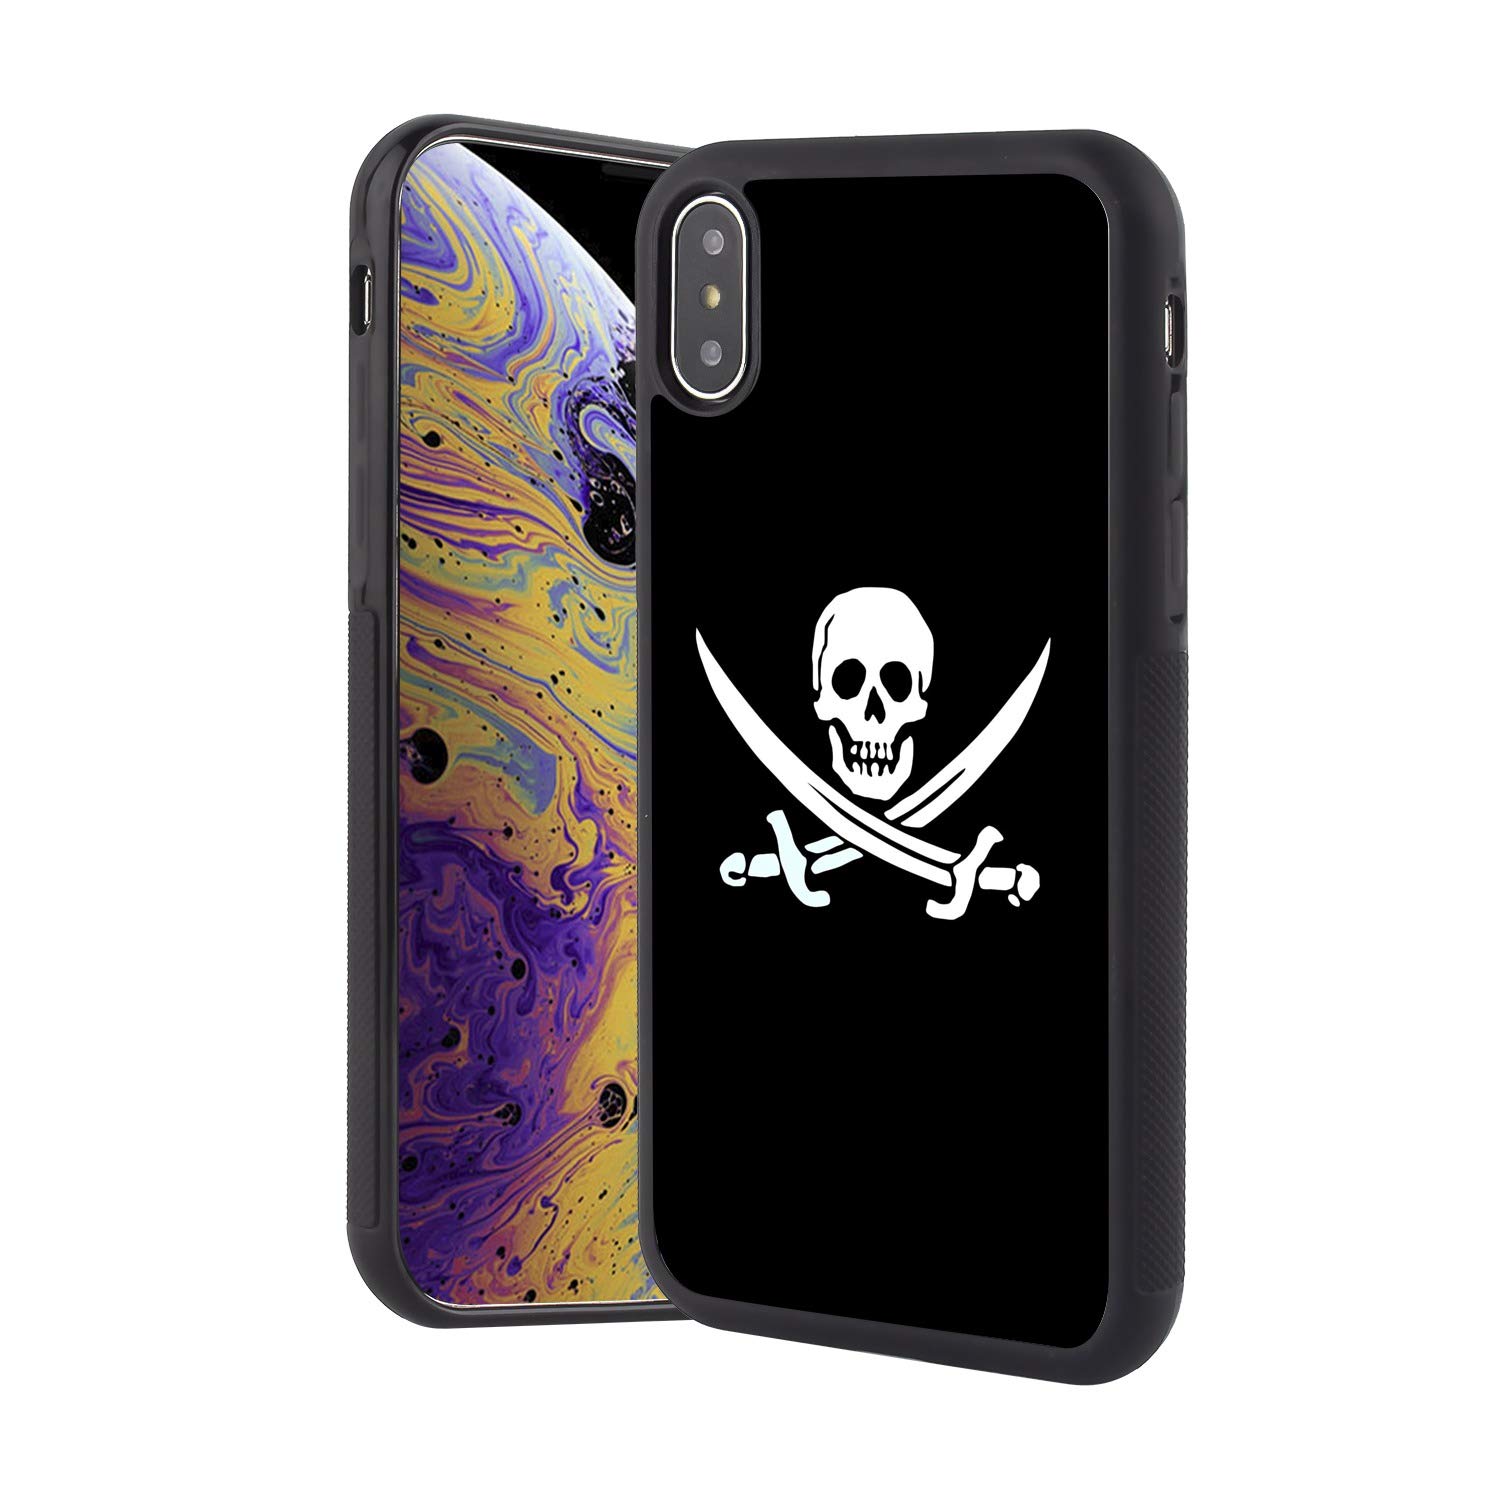 Galaxy Iphone Xr Cases - HD Wallpaper 